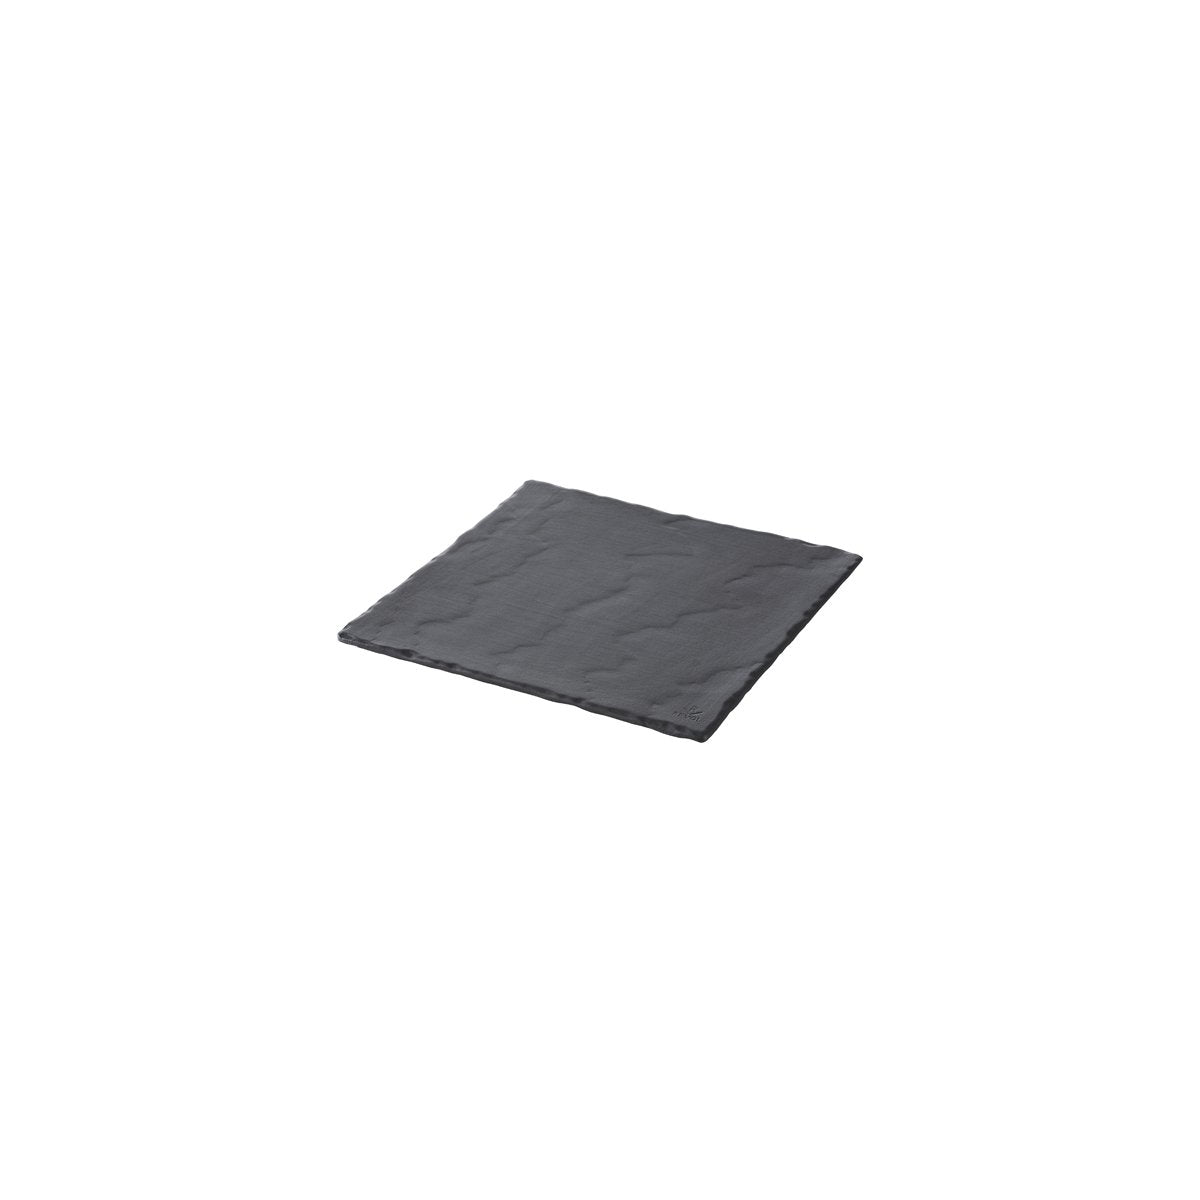 93753 Revol Basalt Square Plate 150x150mm Tomkin Australia Hospitality Supplies